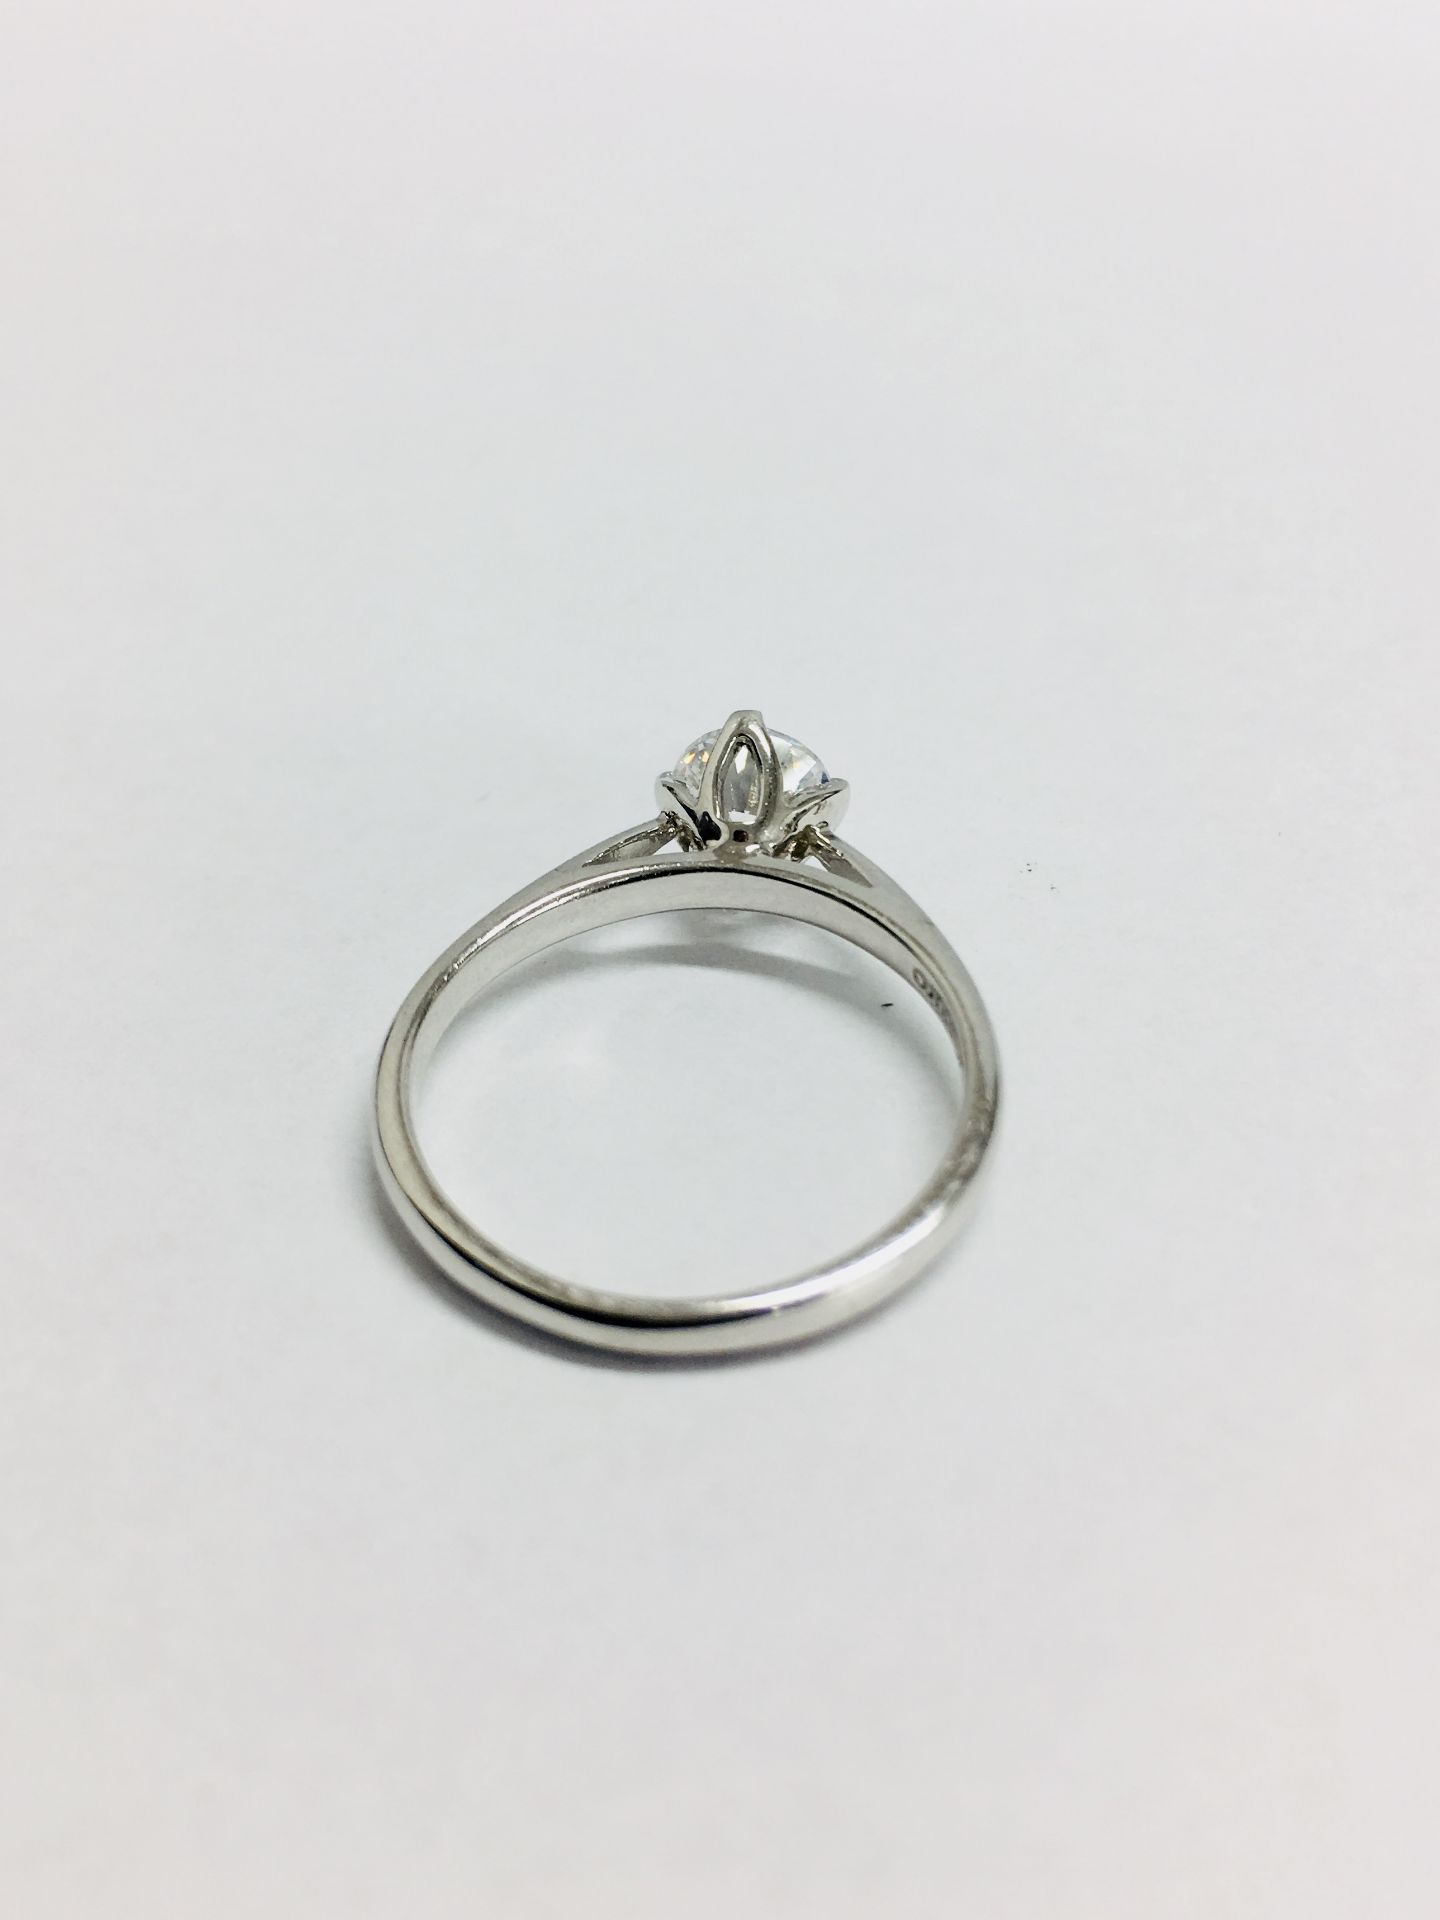 Platinum diamond solitaire ring,0.50ct brillliant cut diamond h colour vs clarity(clarity enhanced), - Image 2 of 6